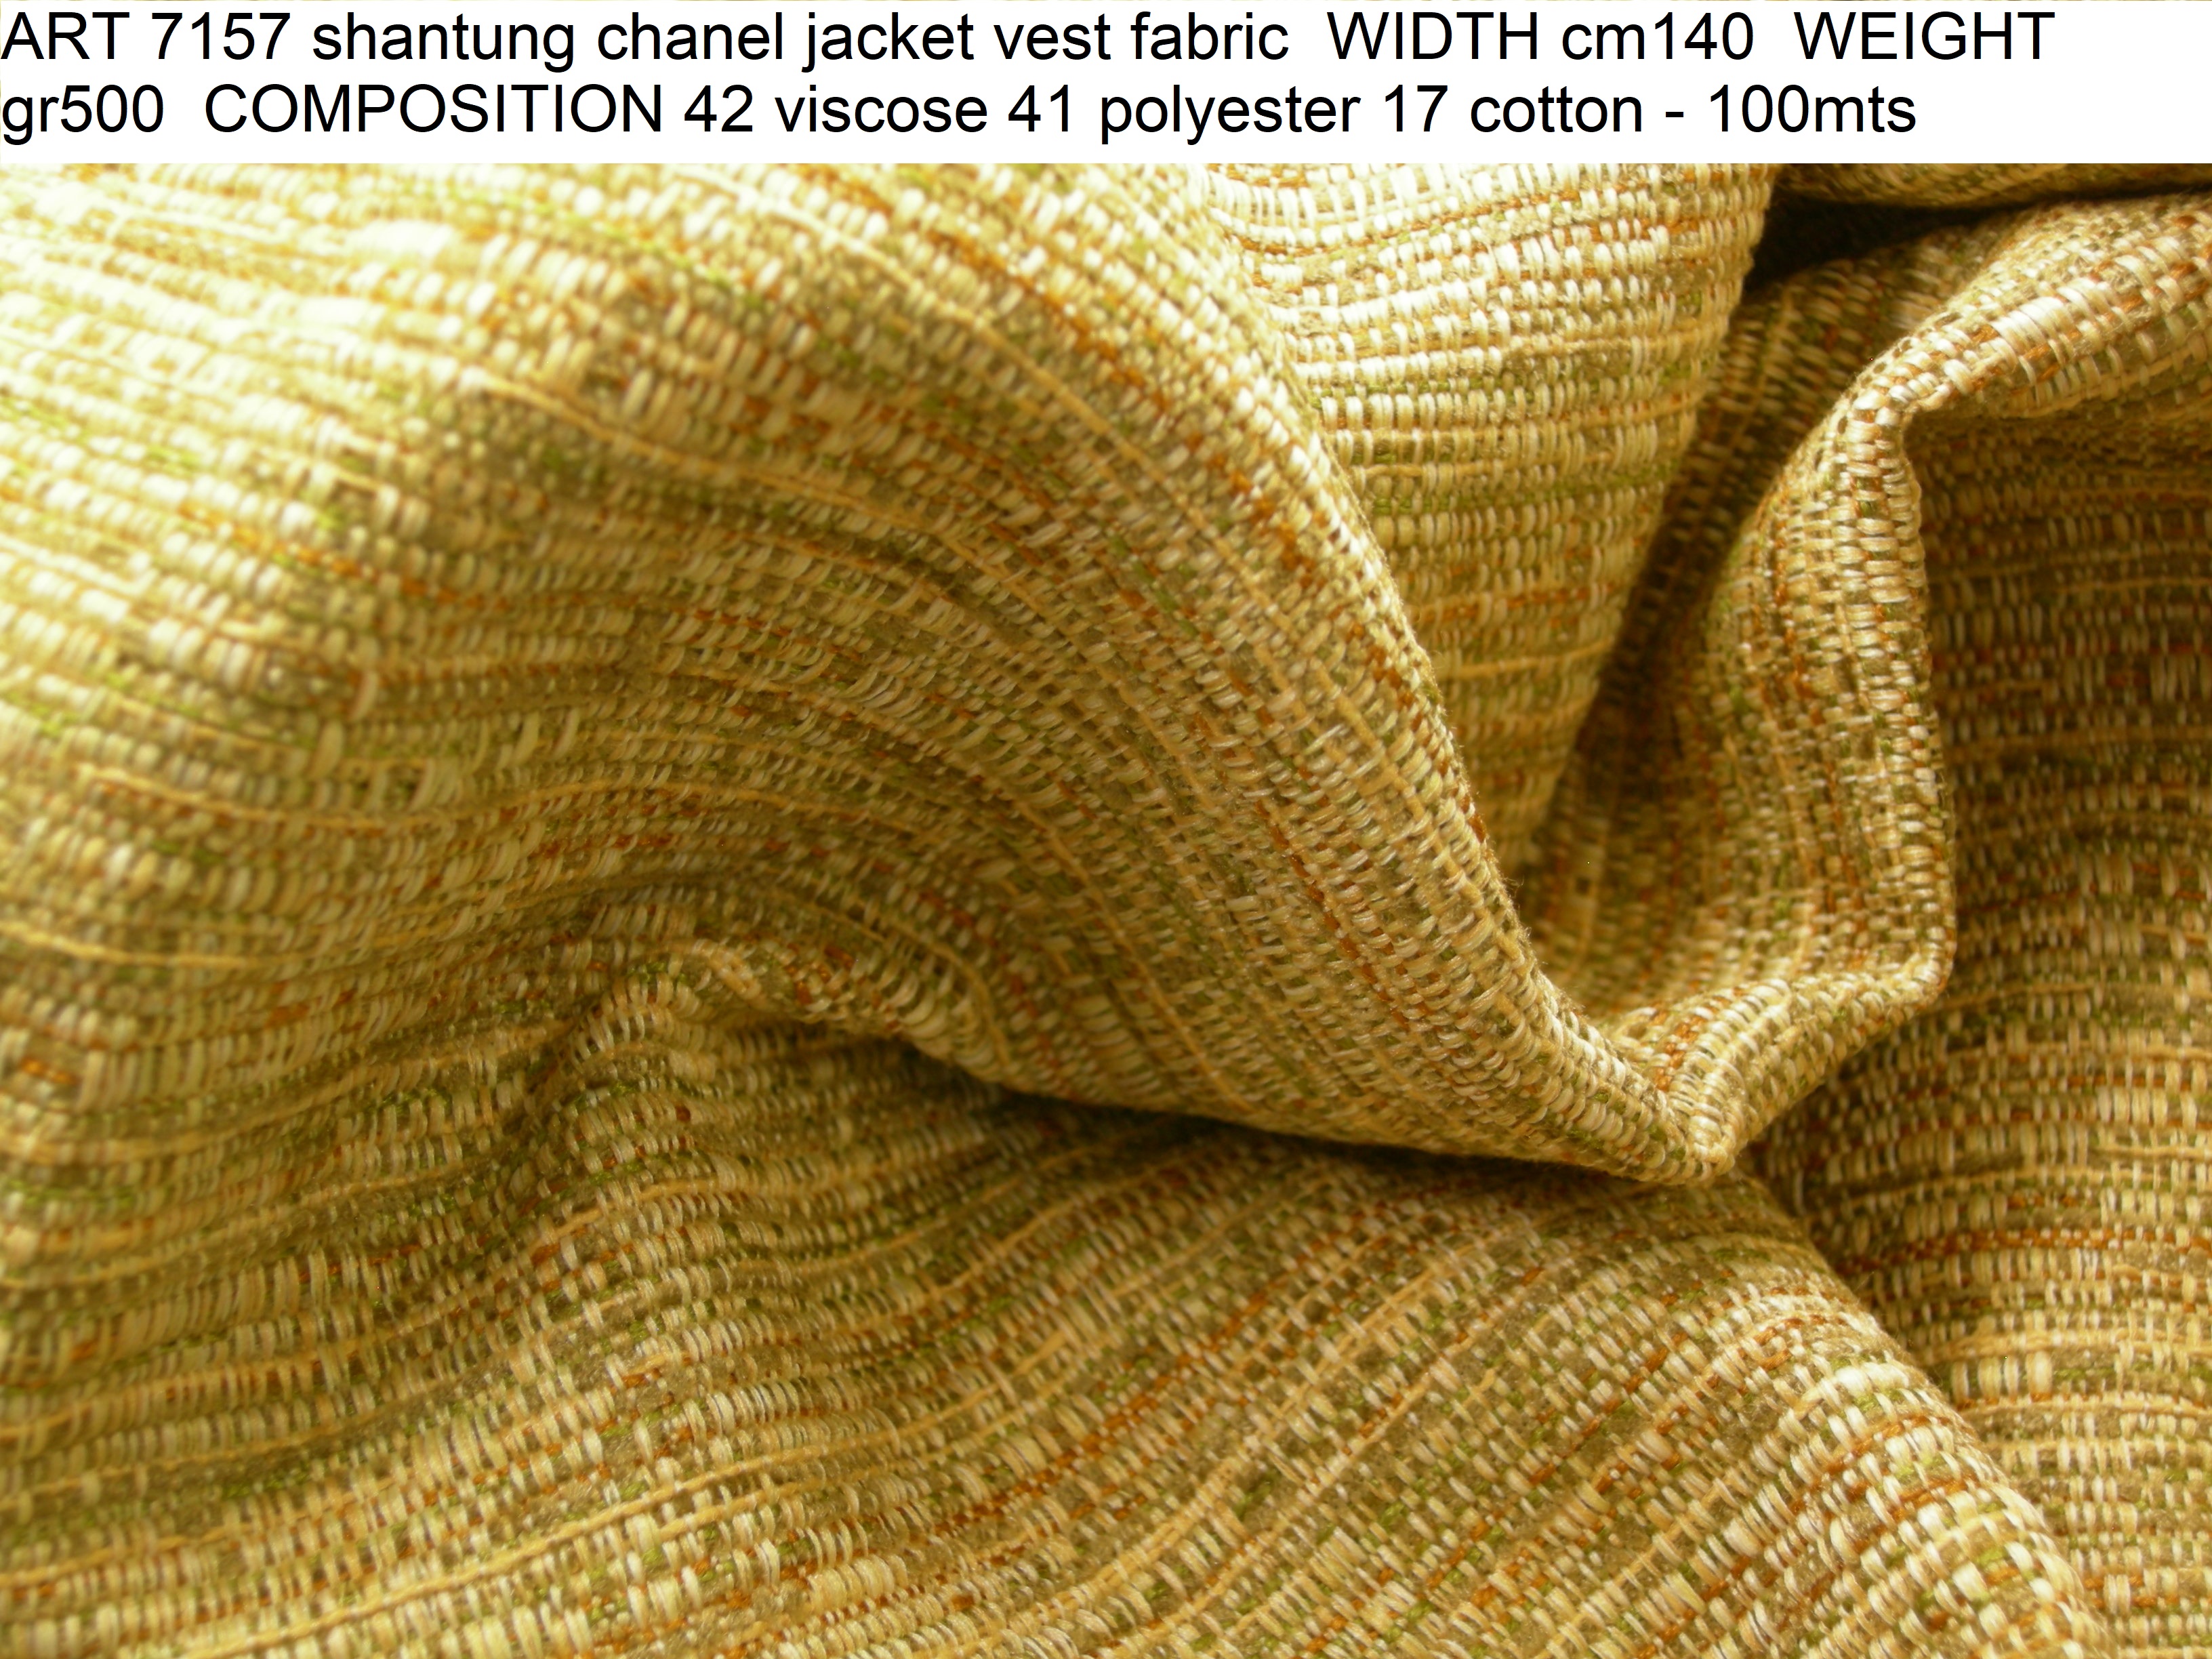 ART 7157 shantung chanel jacket vest fabric WIDTH cm140 WEIGHT gr500 COMPOSITION 42 viscose 41 polyester 17 cotton - 100mts